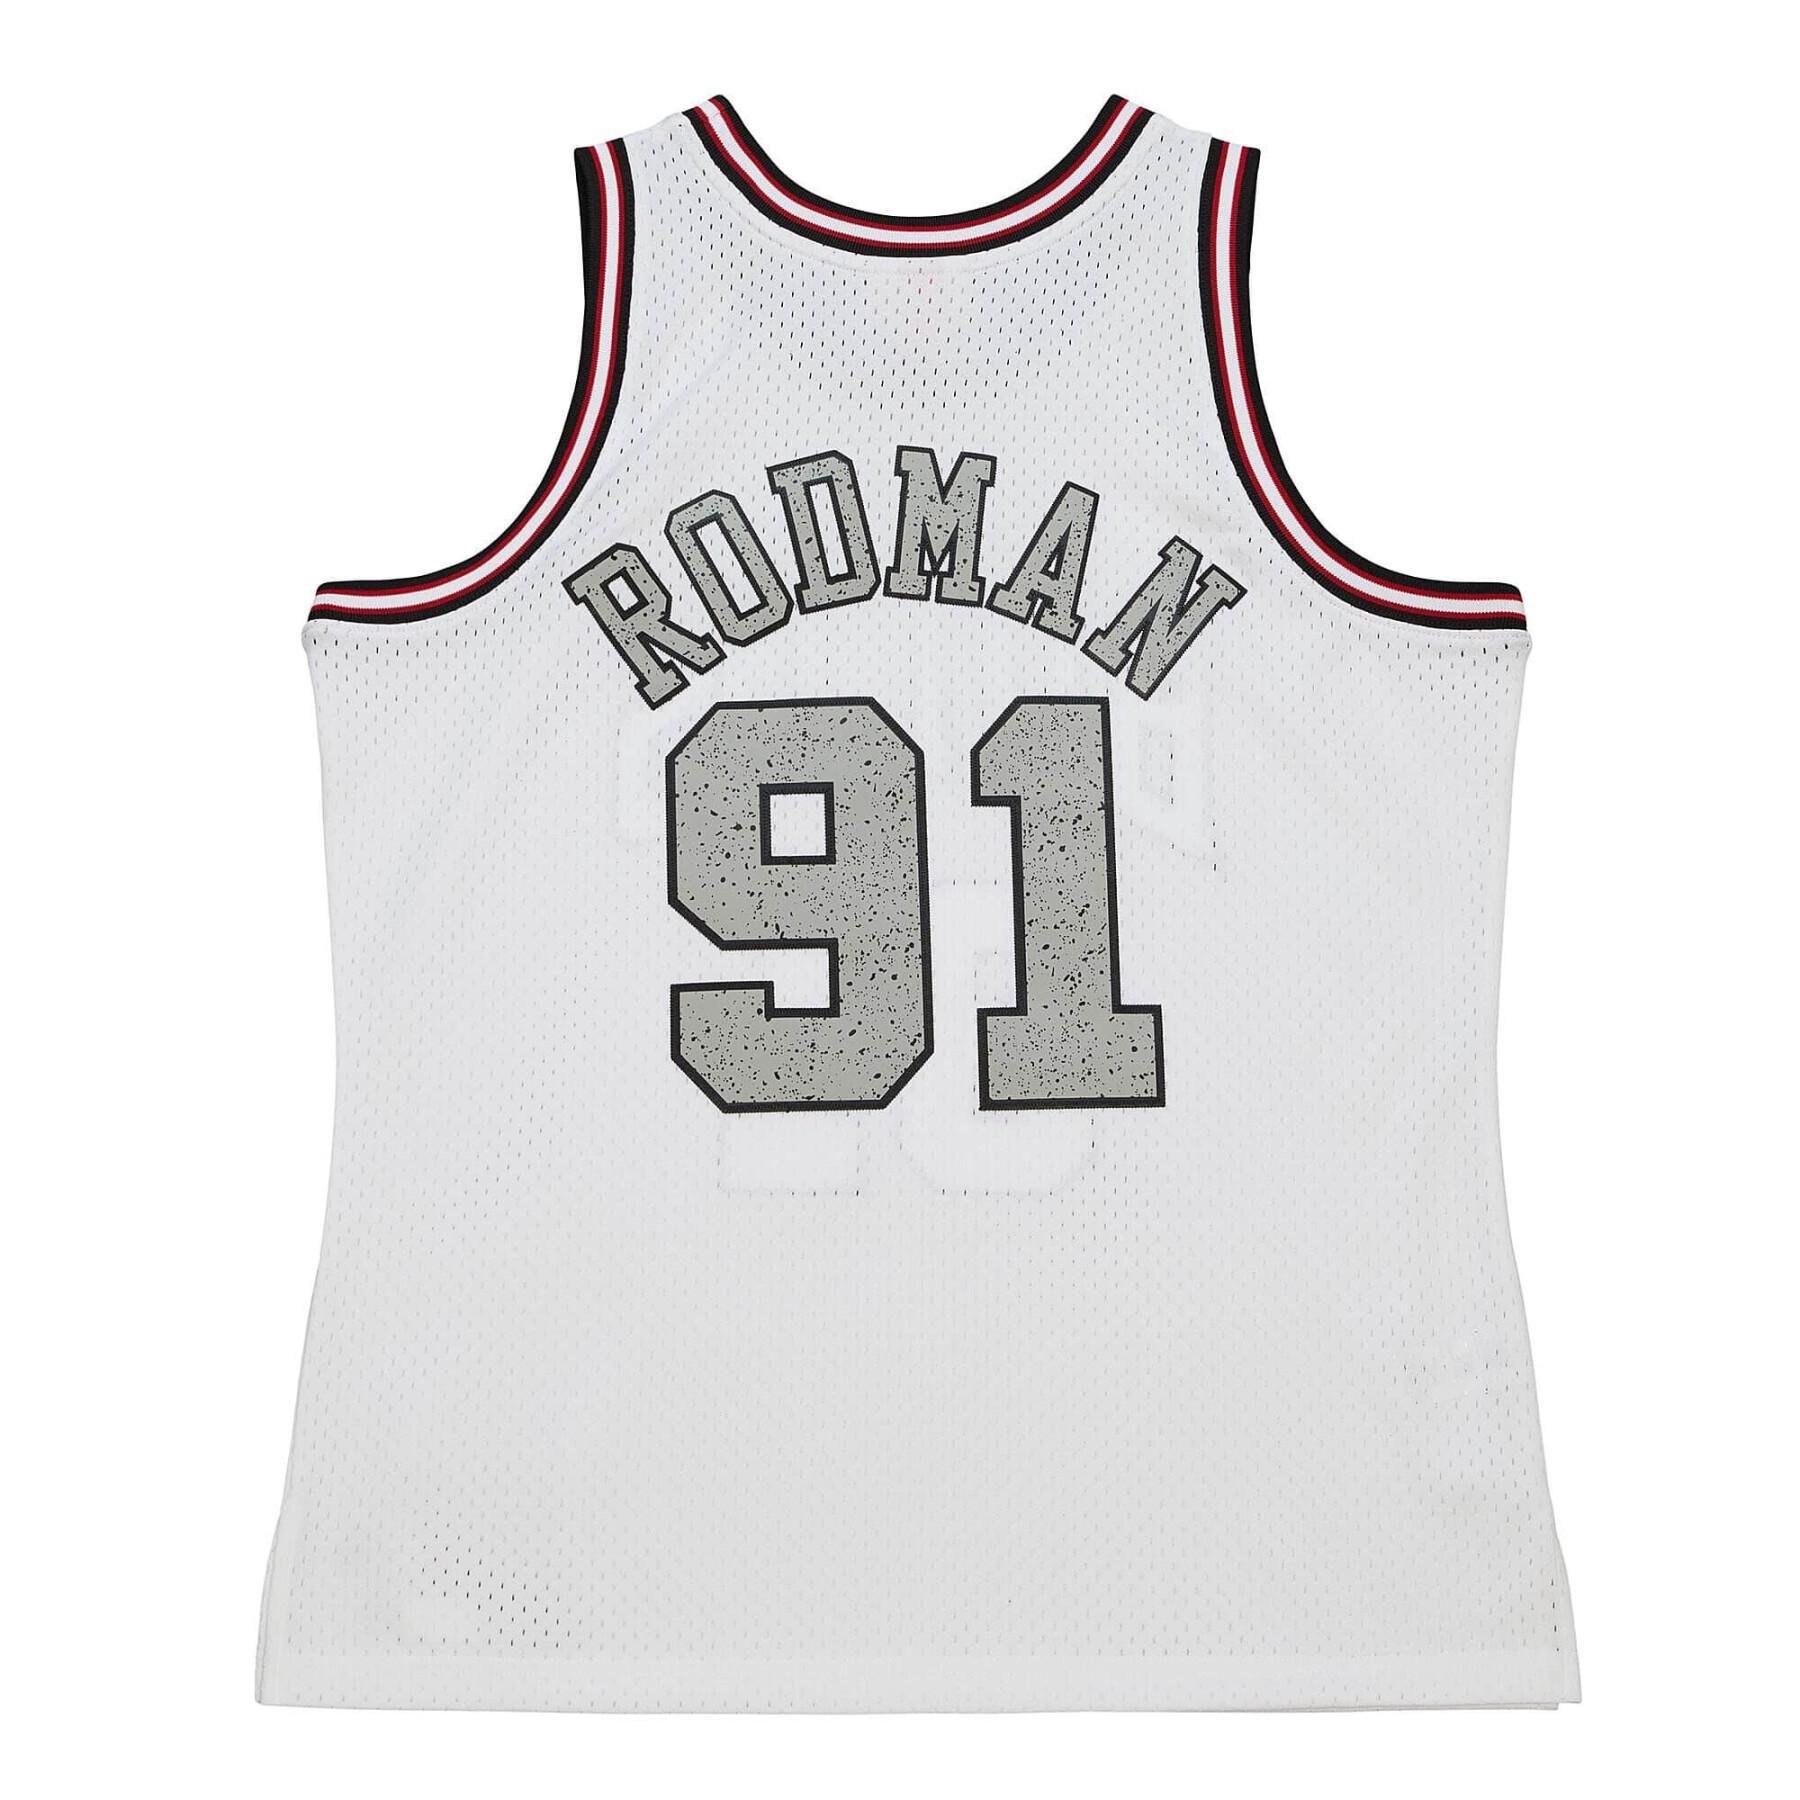 Camiseta Chicago Bulls NBA Cracked Cement Swingman 1997 Dennis Rodman